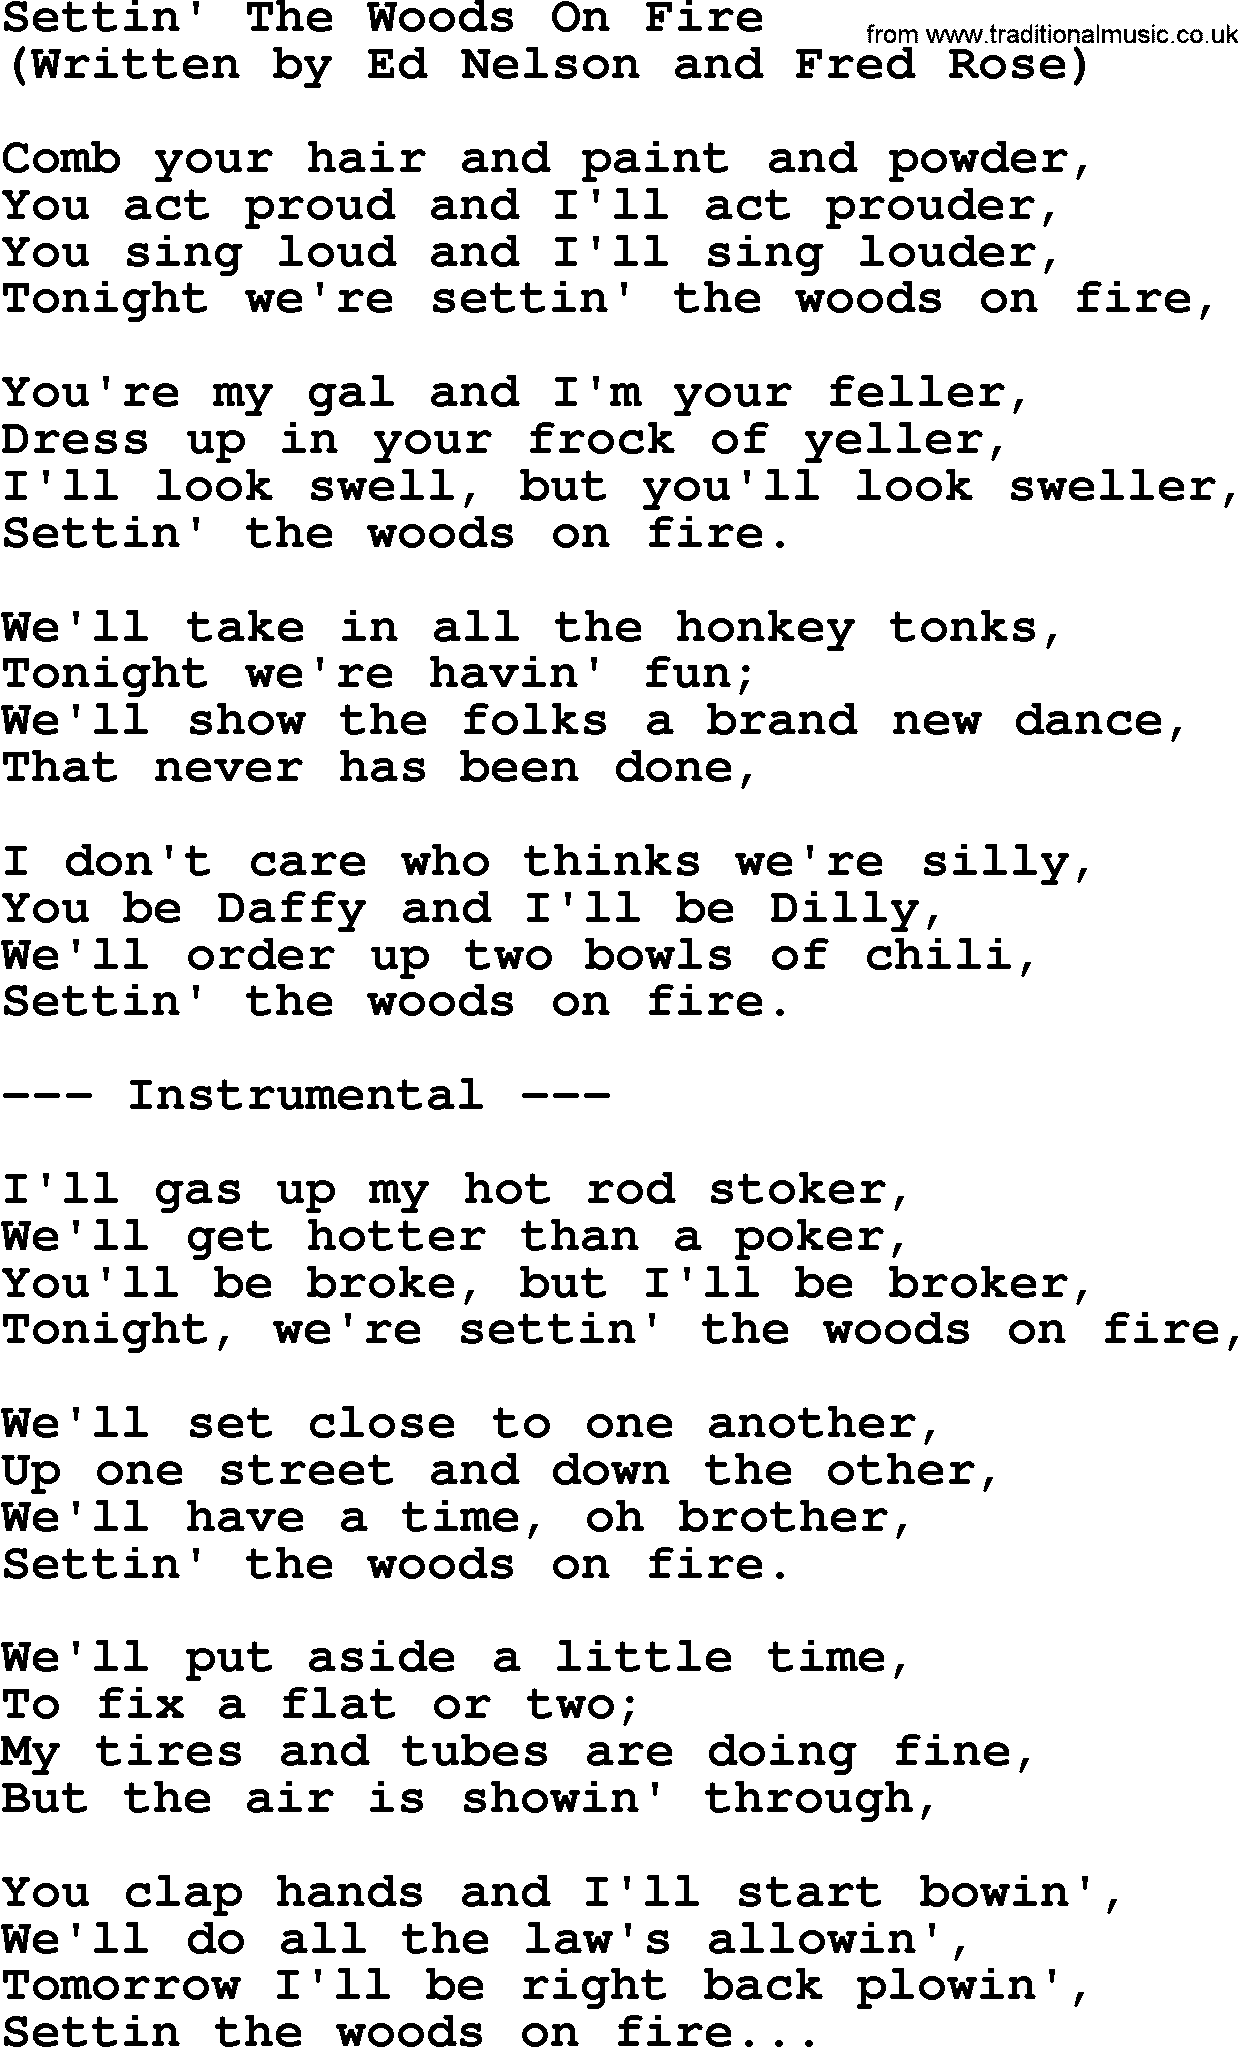 George Jones song: Settin' The Woods On Fire, lyrics